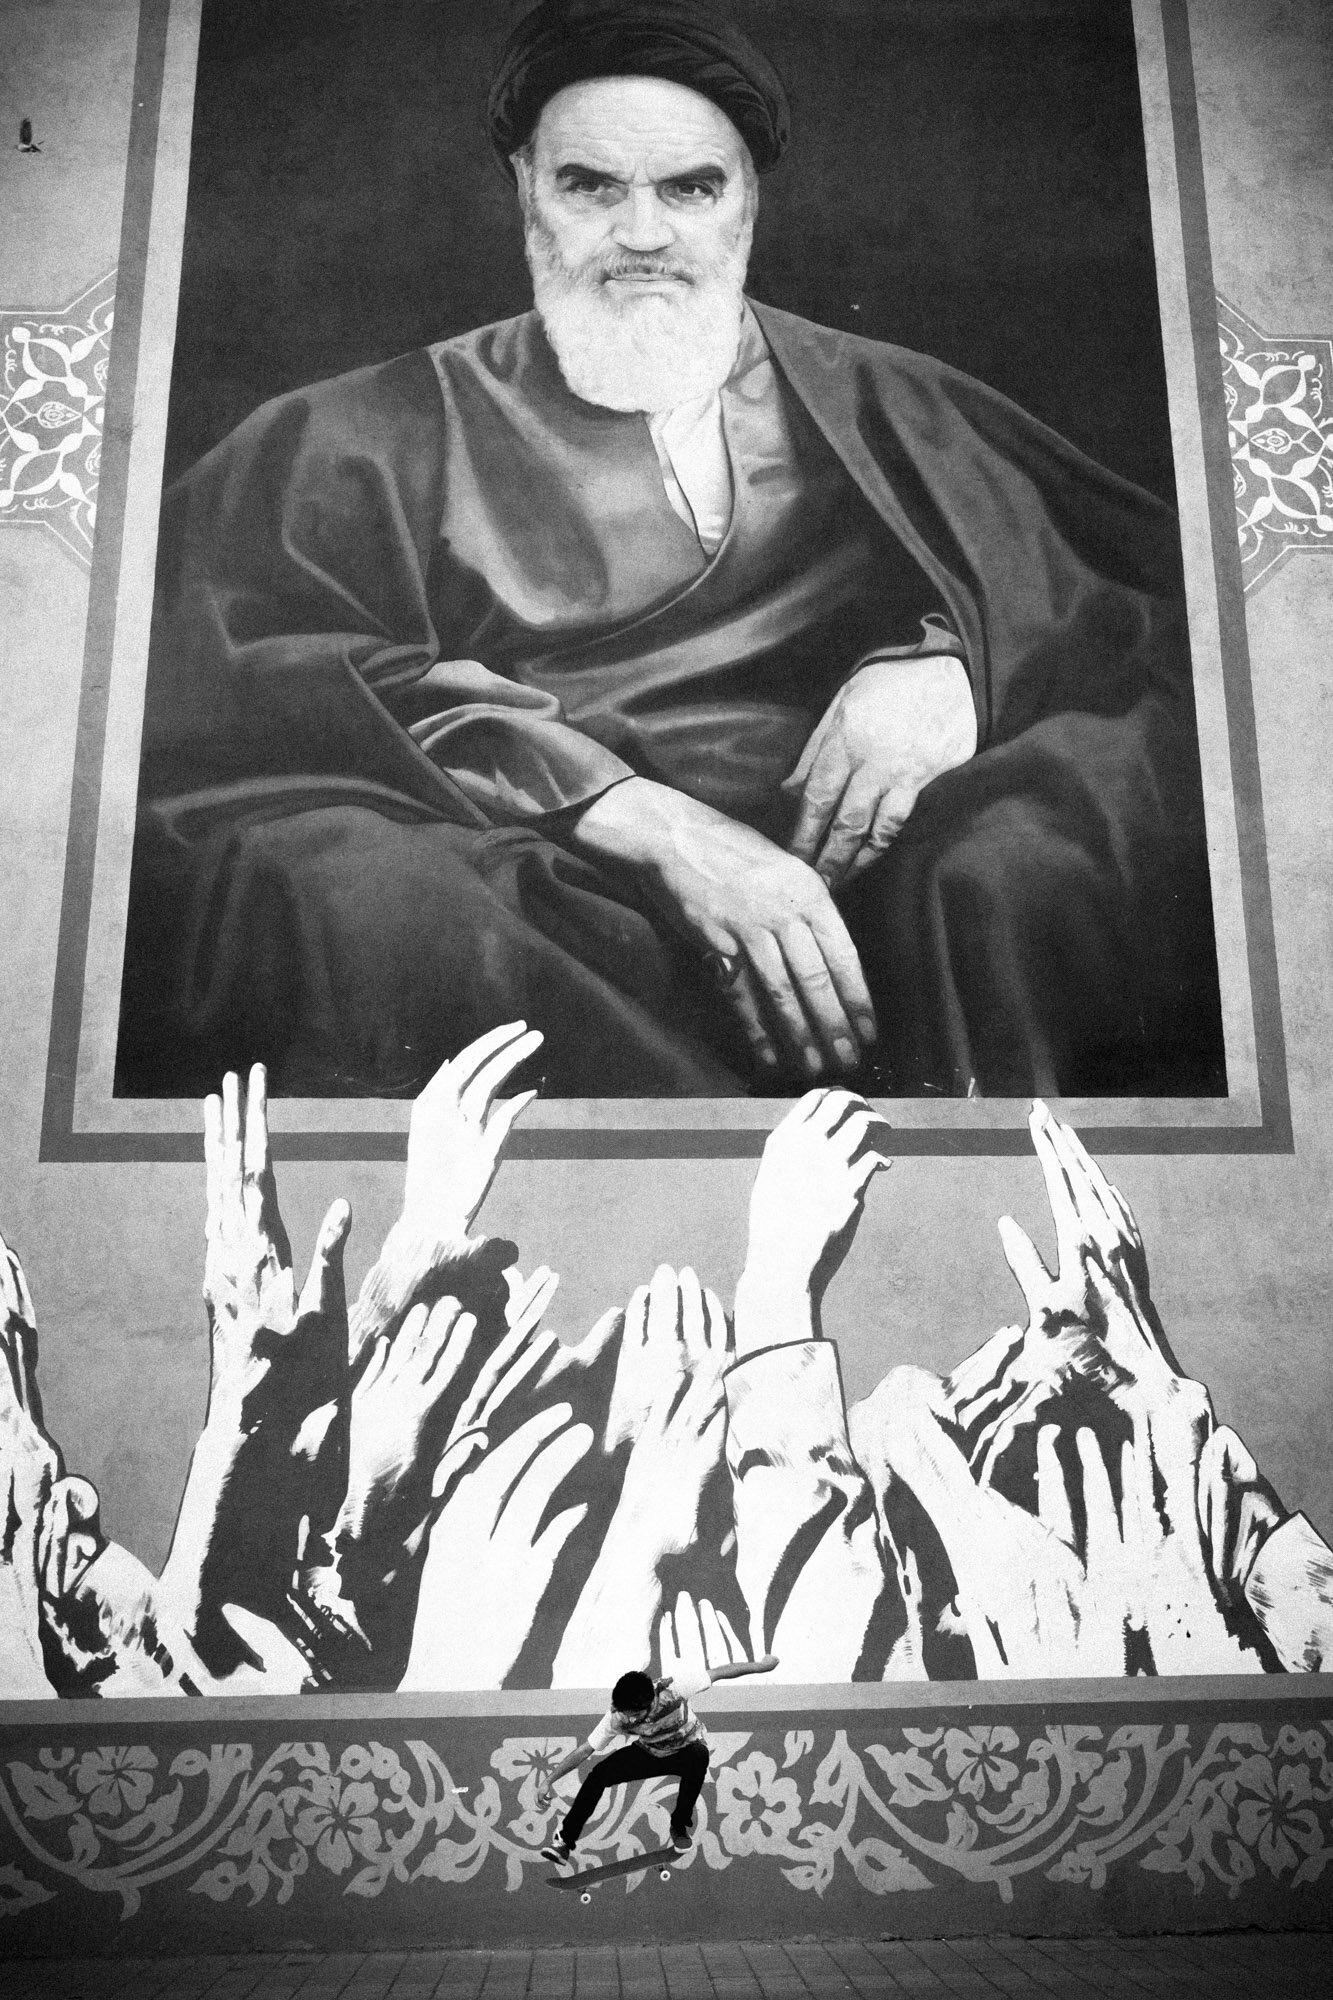  In south of Tehran, Ashkan performs a skate trick in front of a gigantic mural representing the ayatollah Khomeini, the Supreme Leader of the Islamic Revolution. Tehran, Iran, October 24, 2015. 